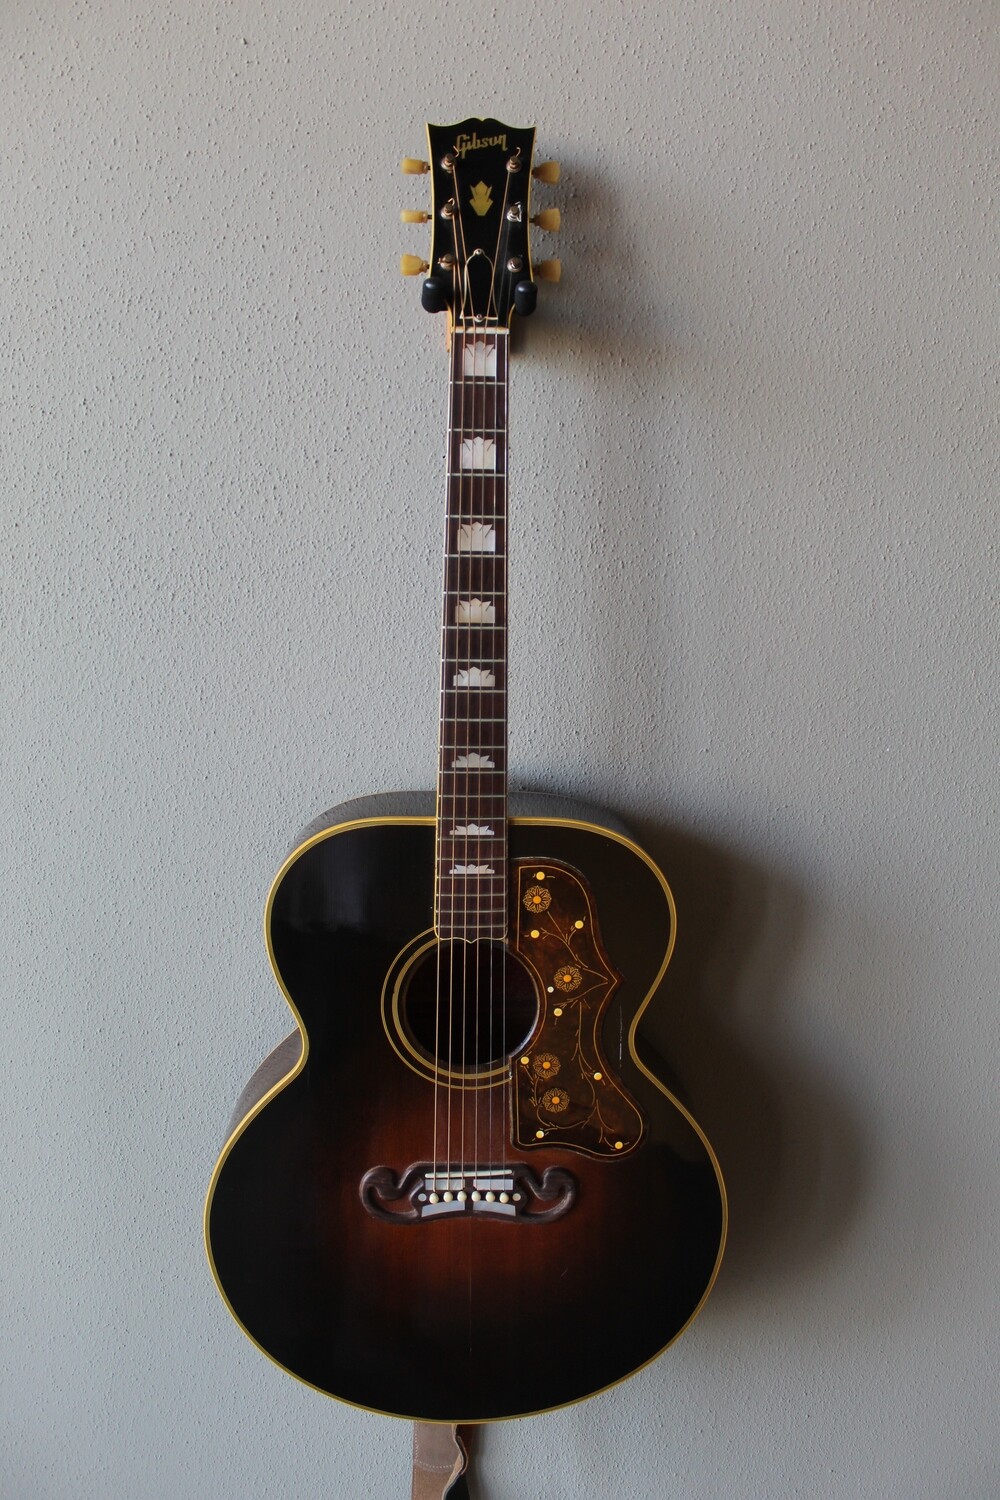 1951 Gibson SJ-200 Vintage Acoustic Guitar - Sunburst